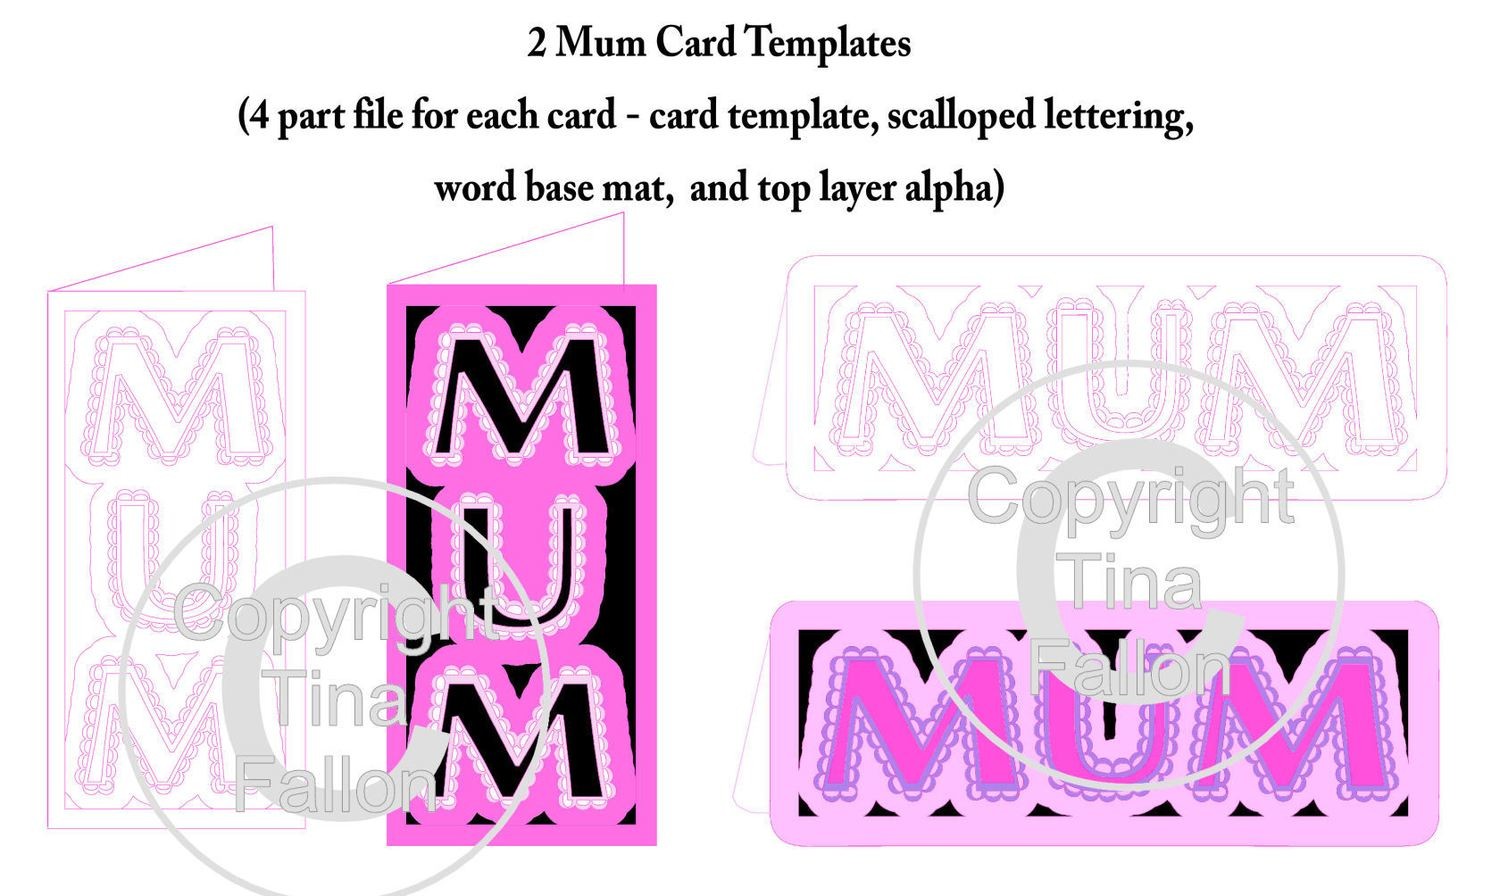 Scalloped Mum Word Card Templates x 2